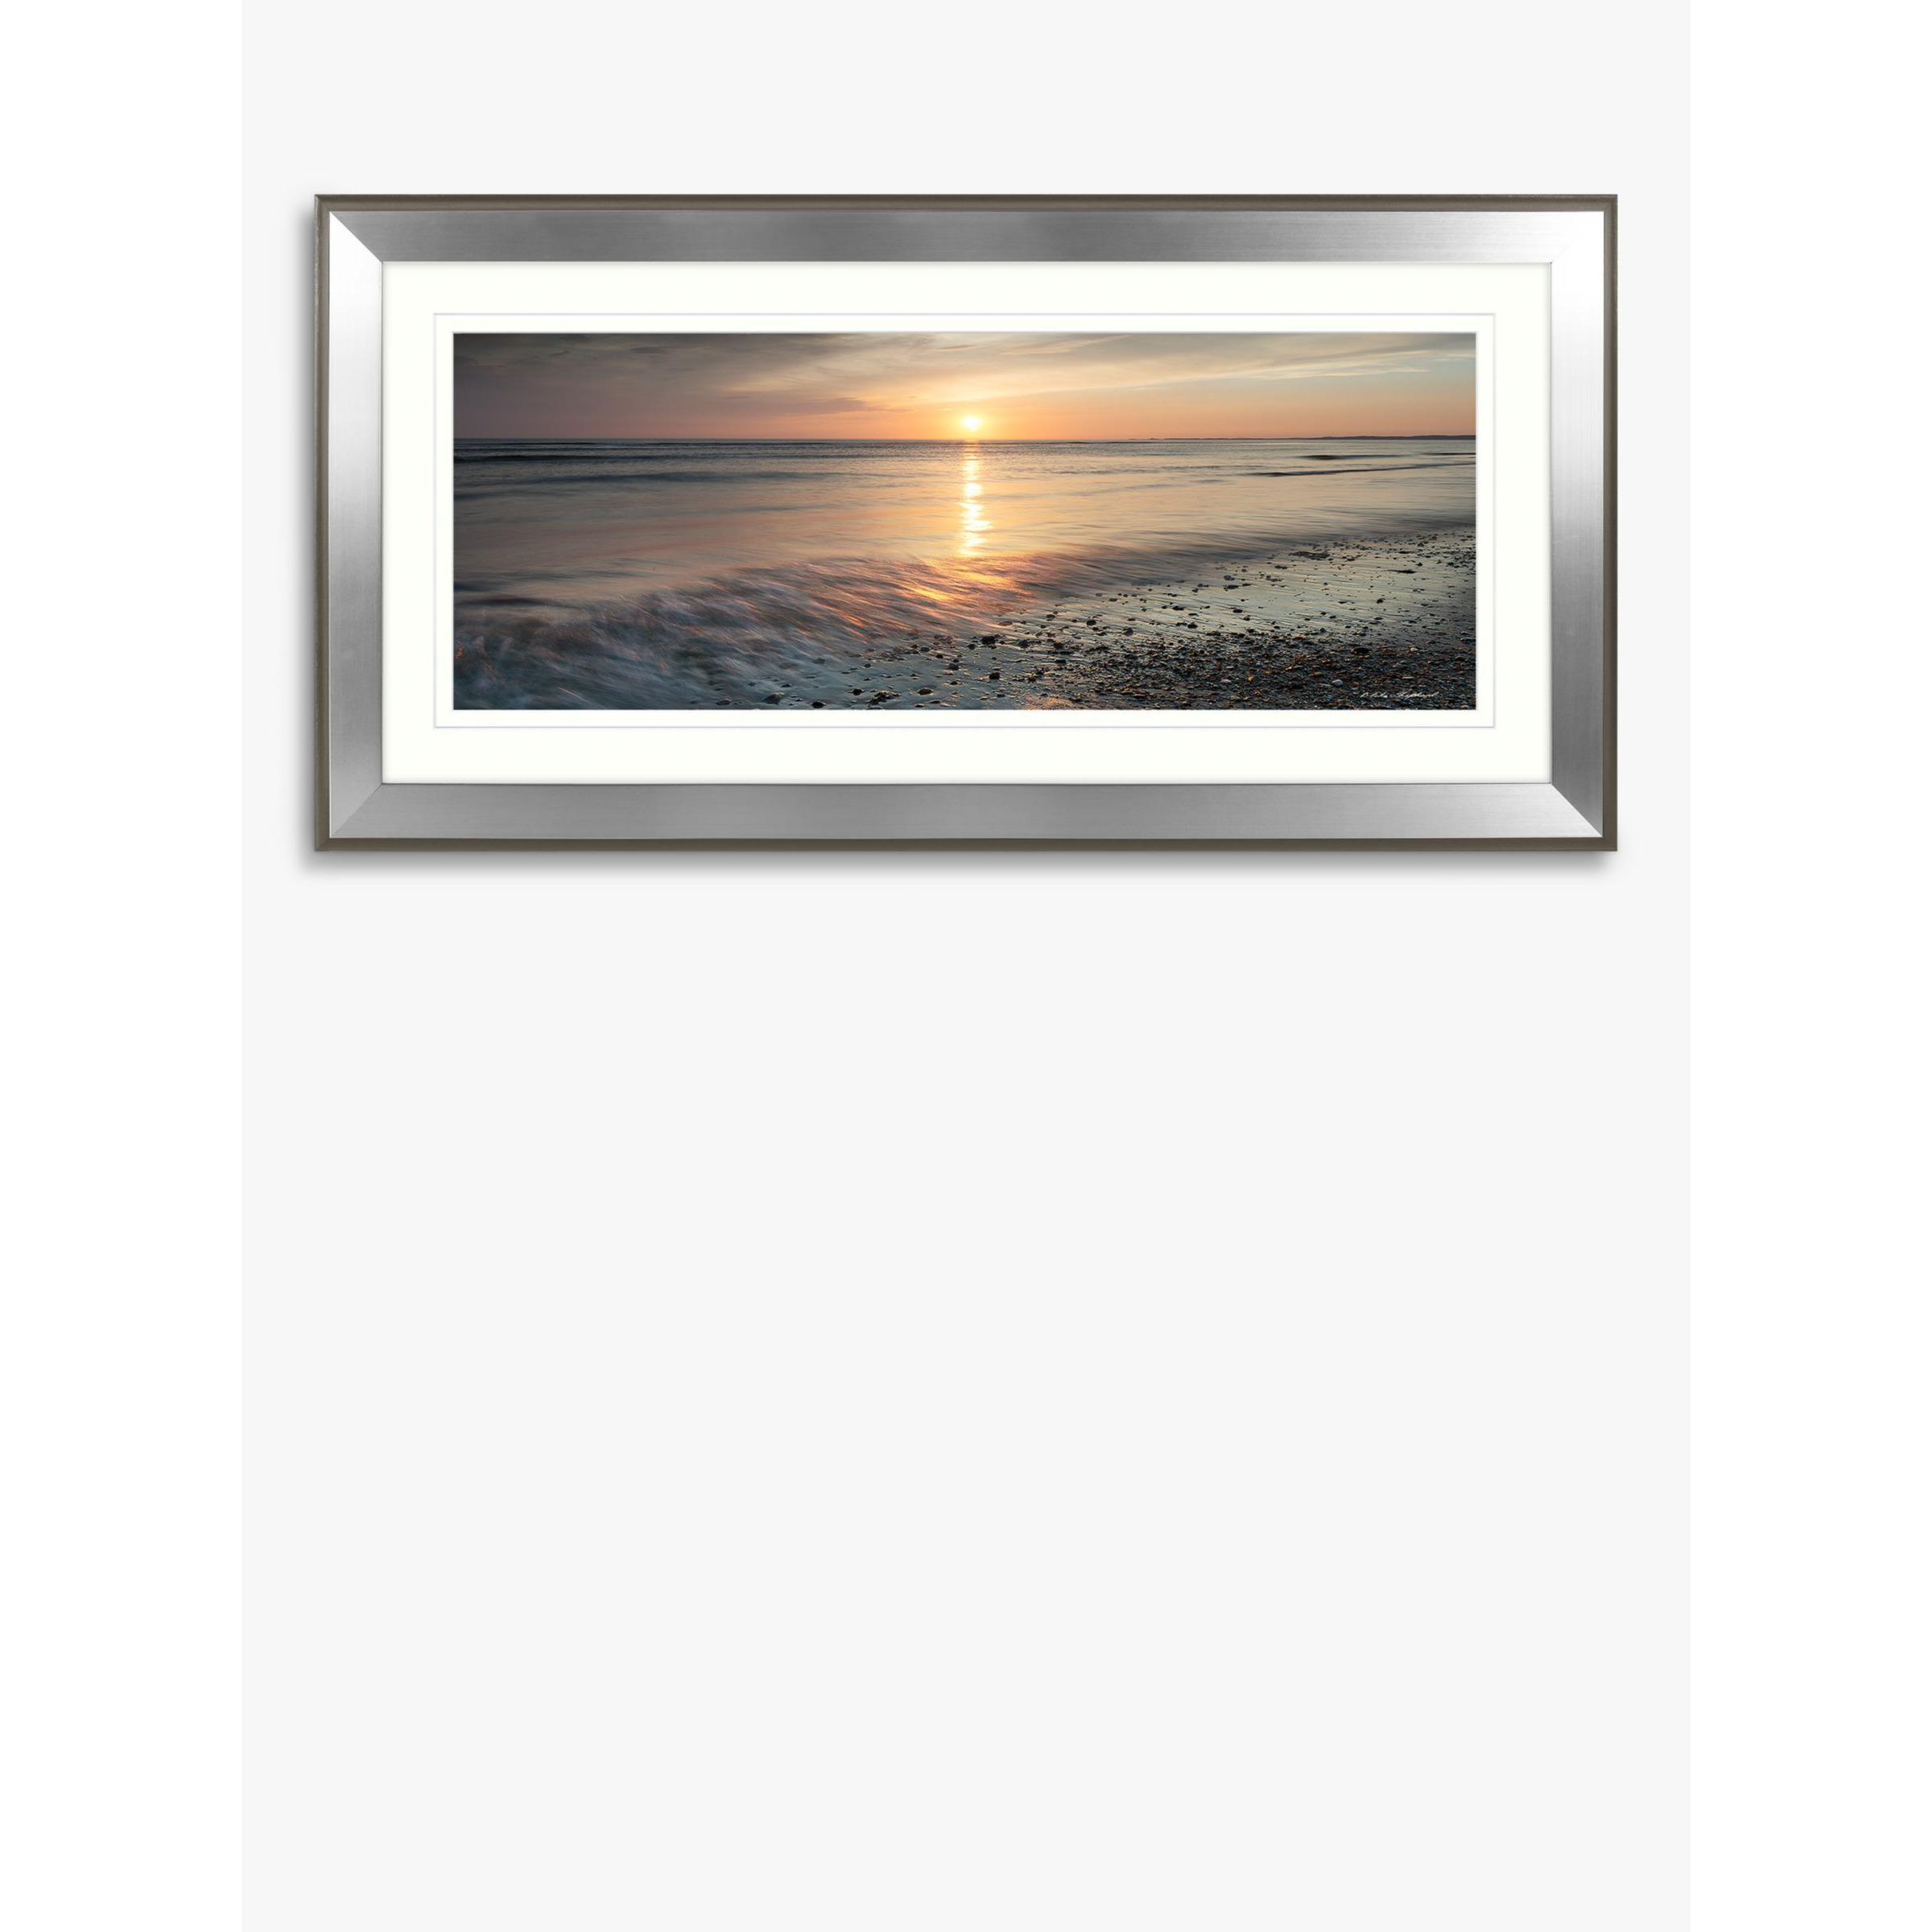 John Lewis Mike Shepherd 'Ebb & Flow' Embellished Framed Print & Mount, 55 x 110cm, Orange/Multi - image 1